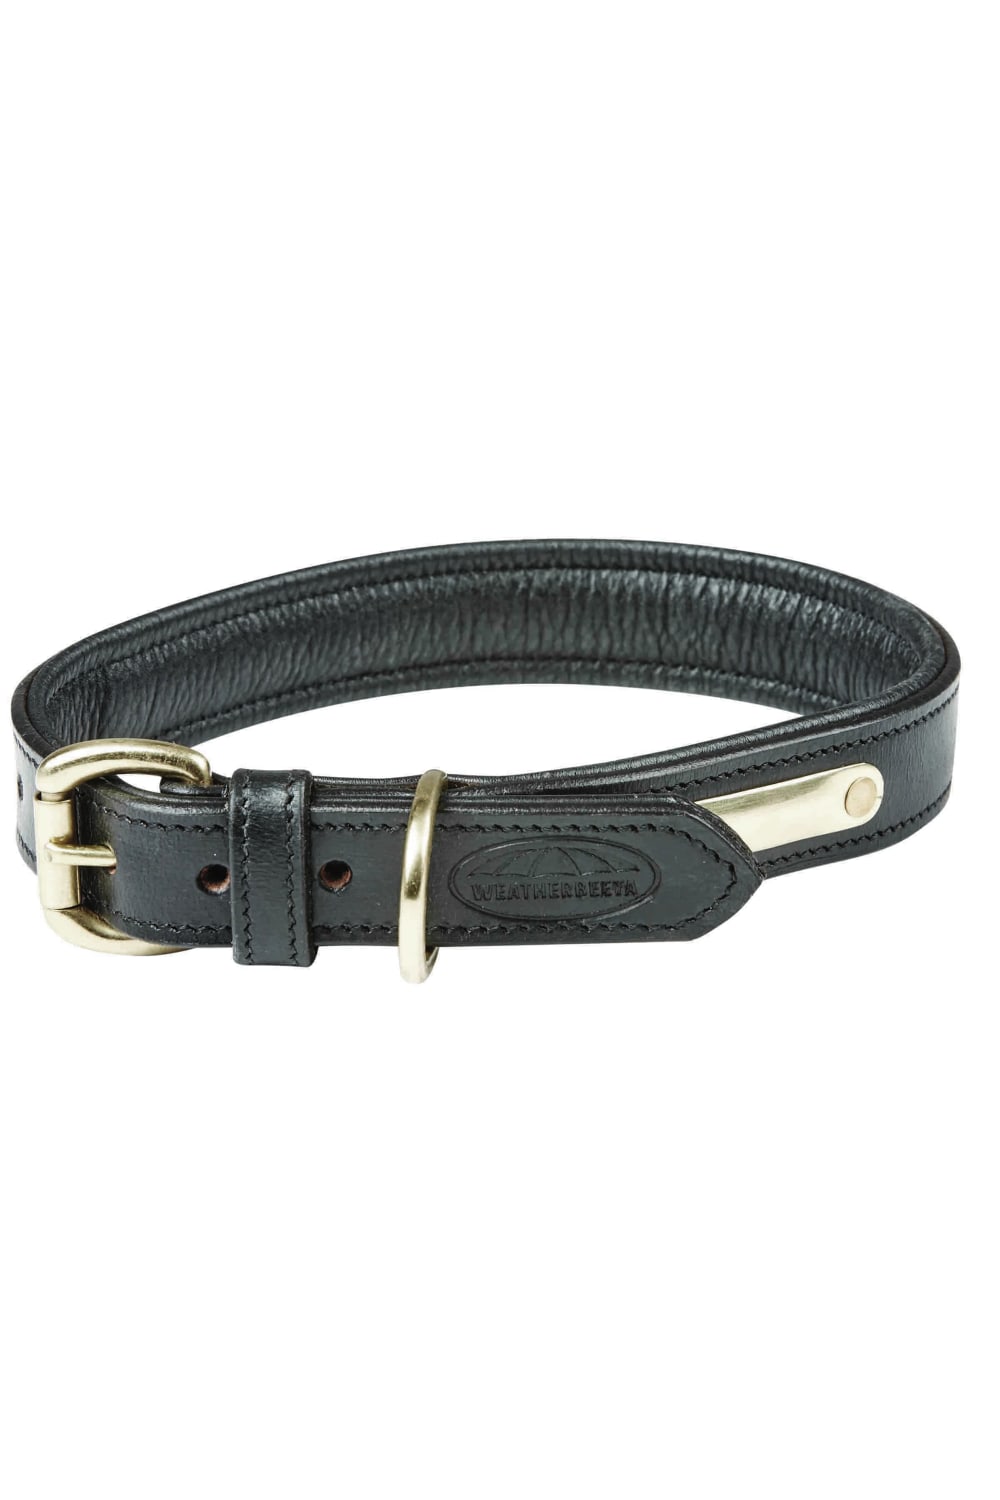 Weatherbeeta Padded Leather Dog Collar (Black) (XXL)